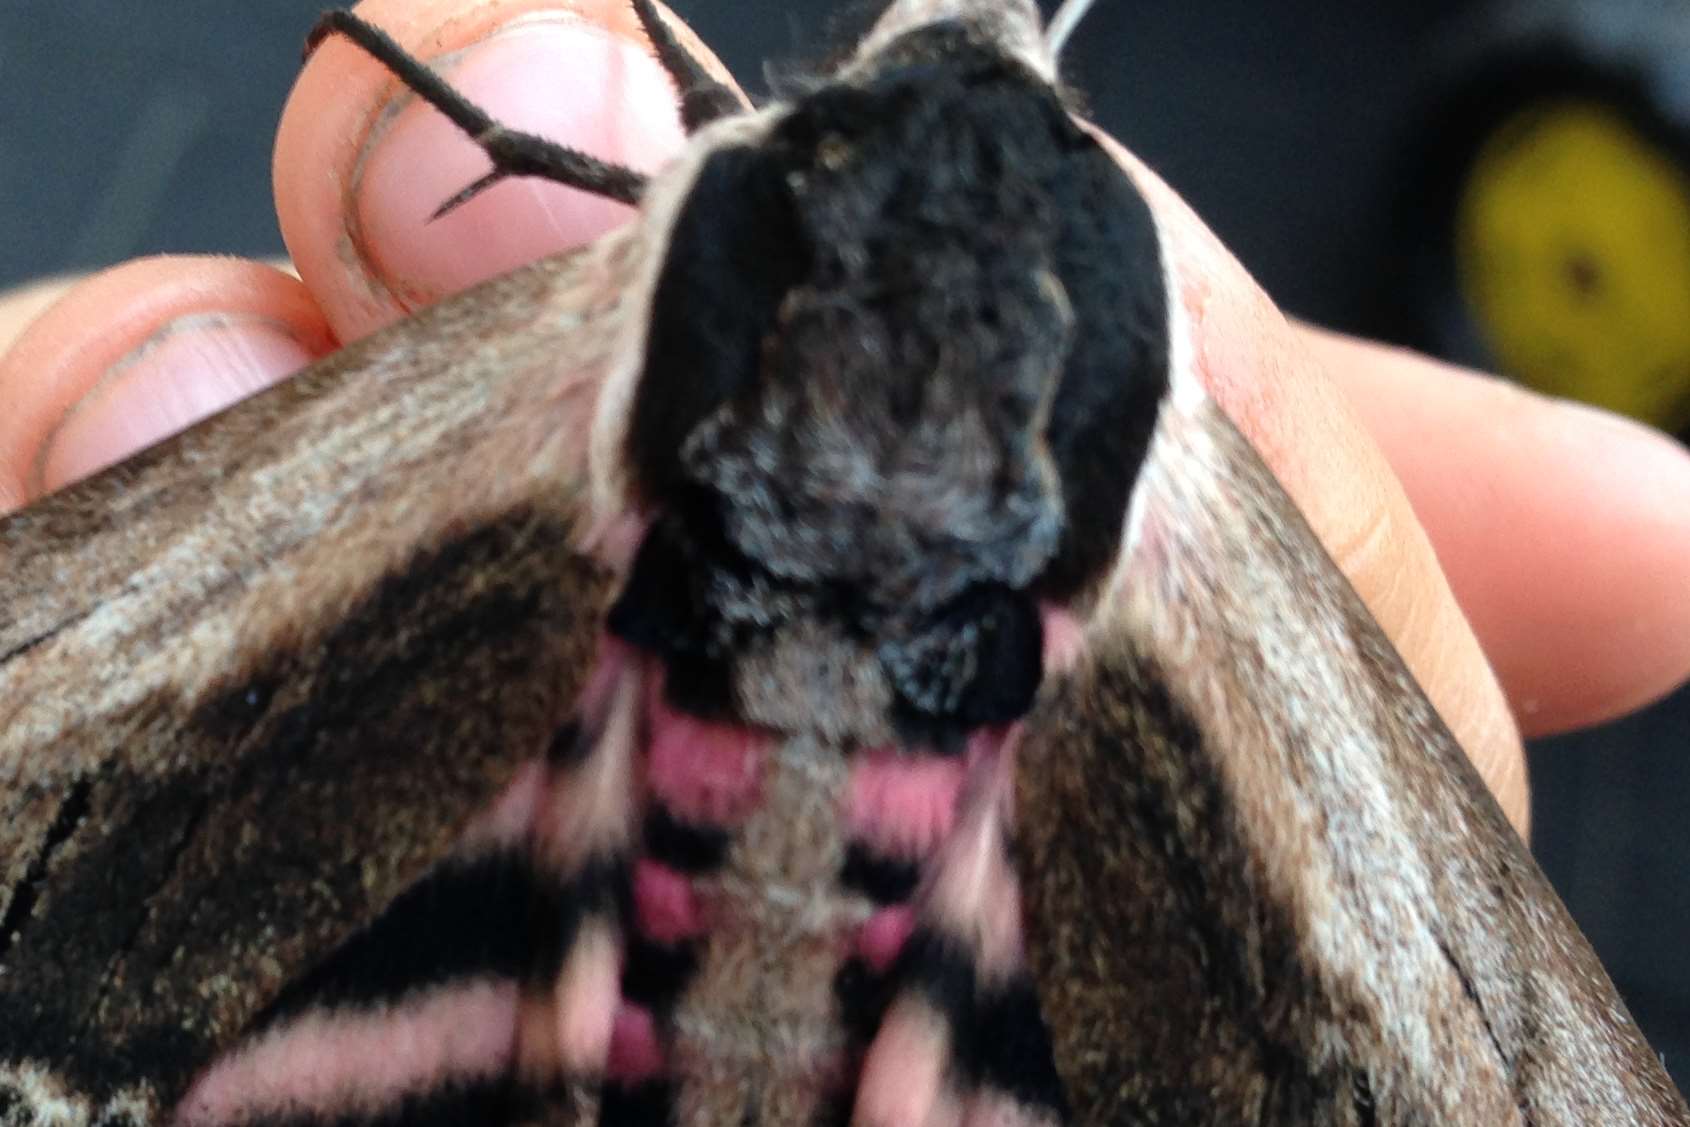 The moth had distinctive markings on its body